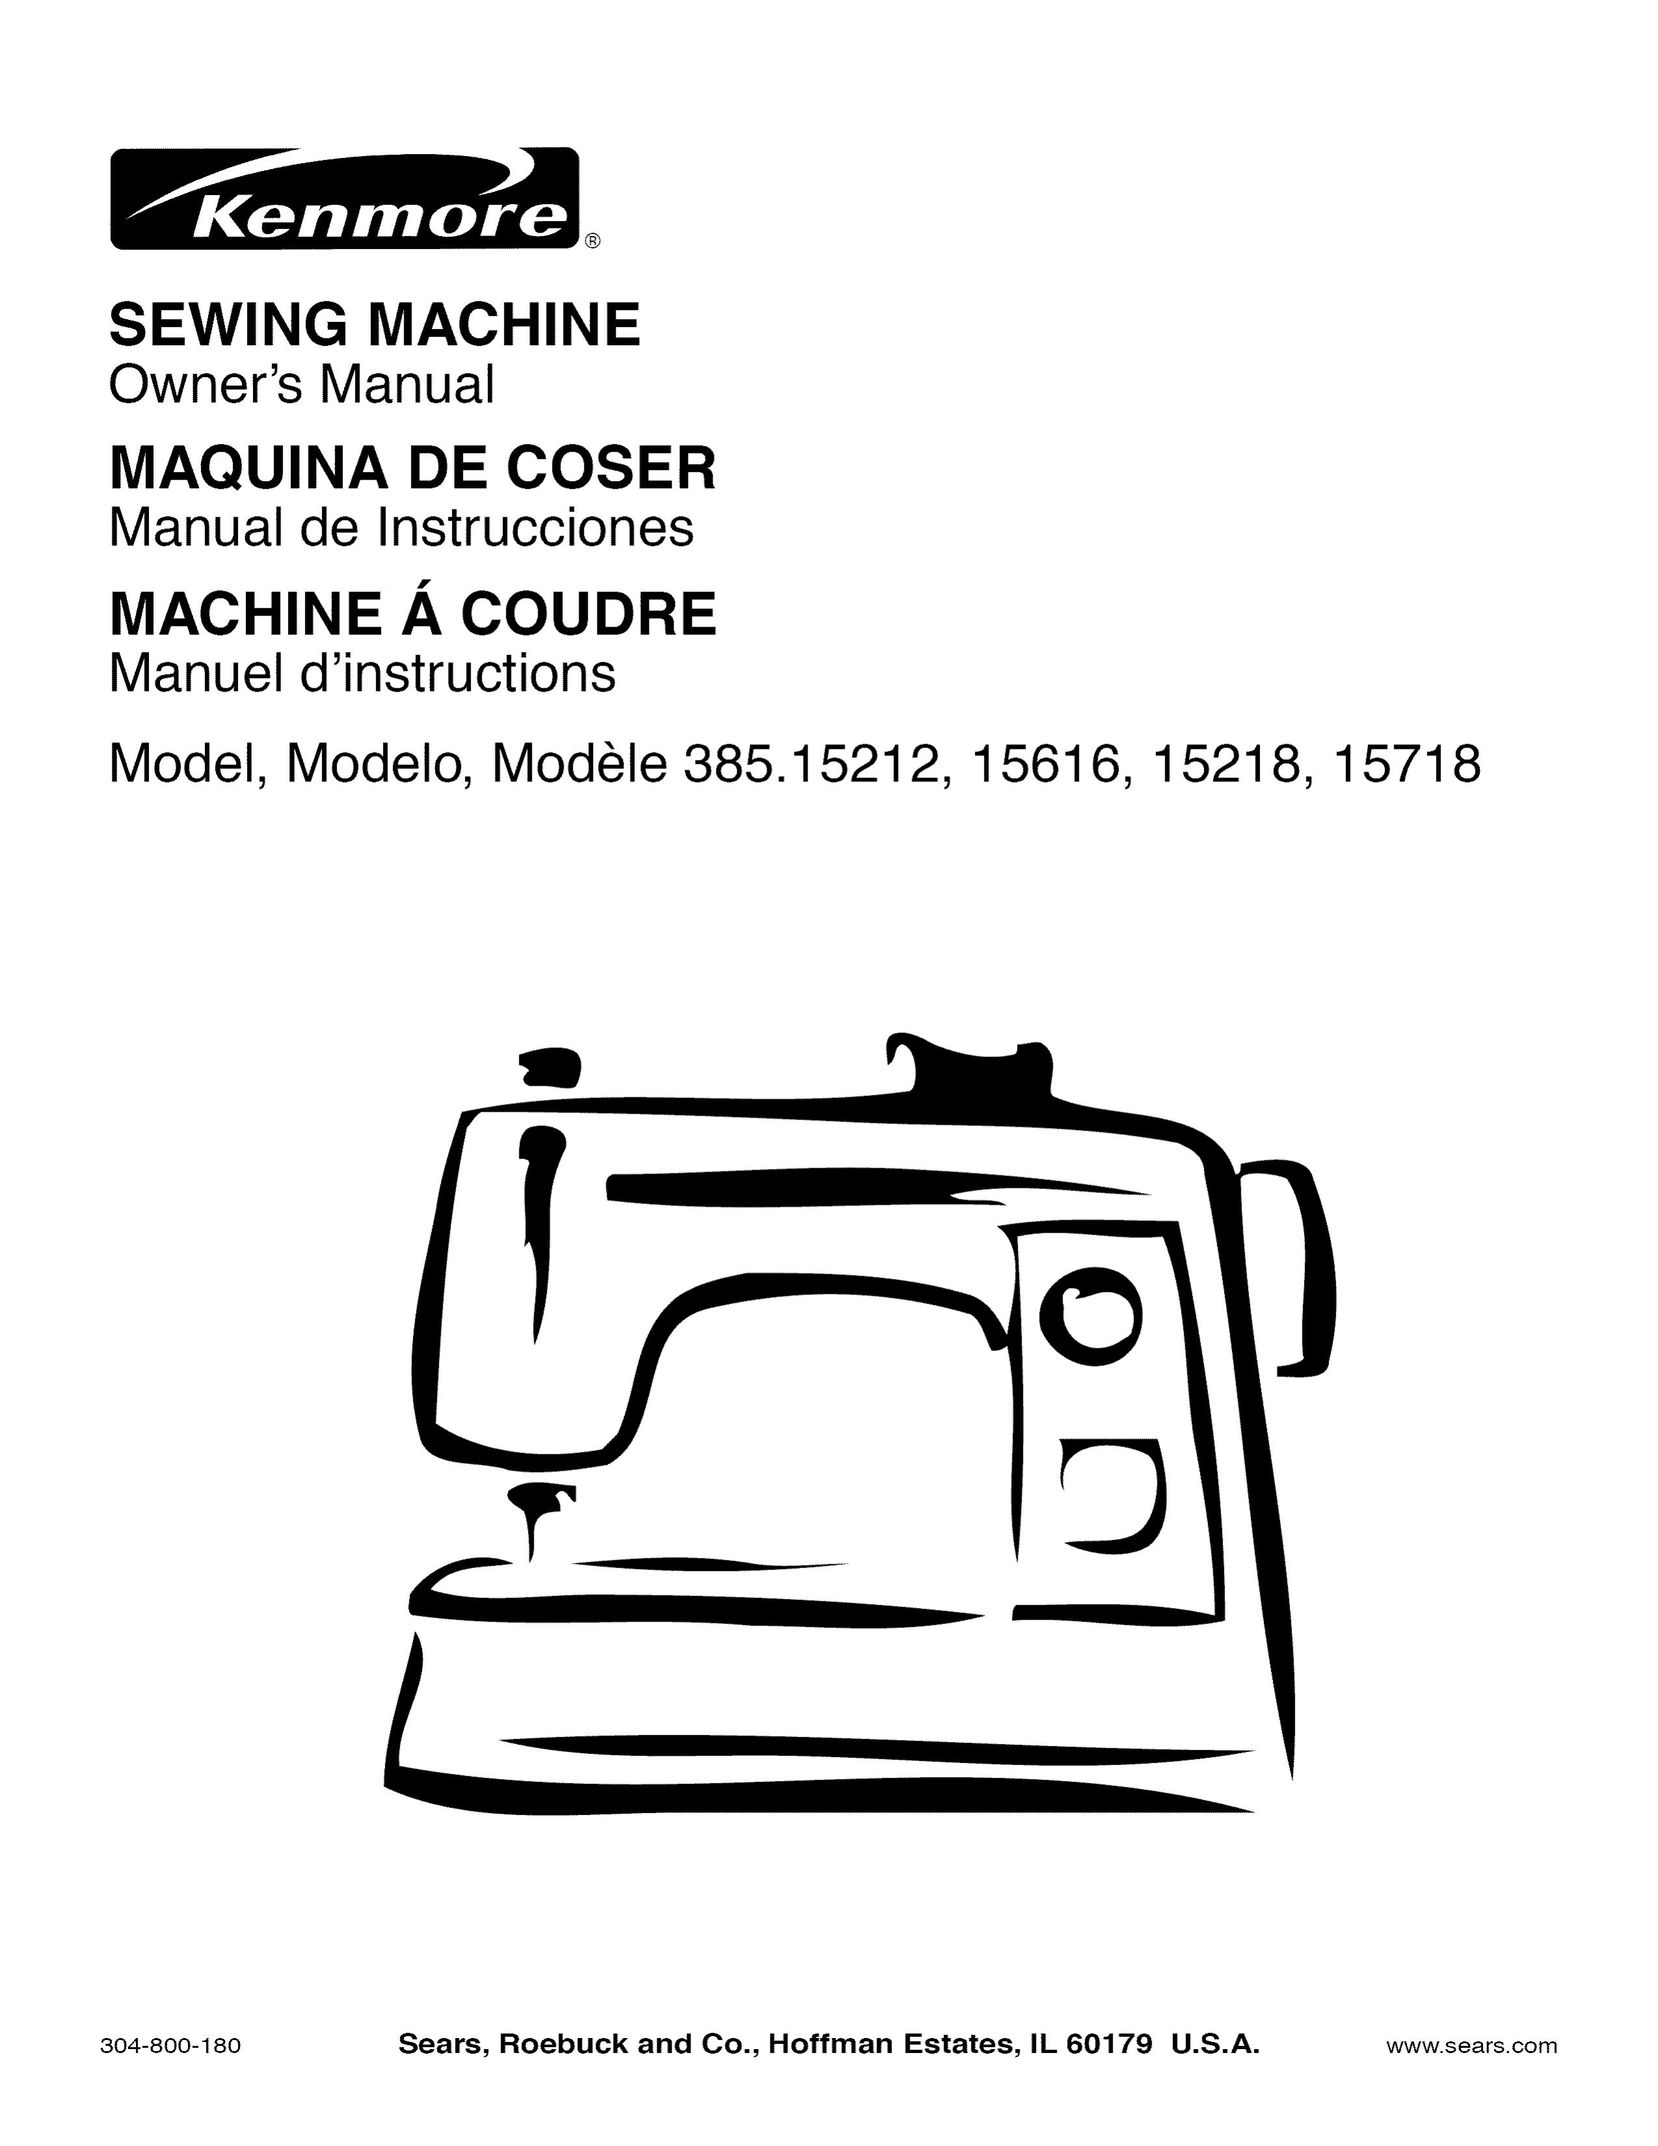 Kenmore 15718 Sewing Machine User Manual